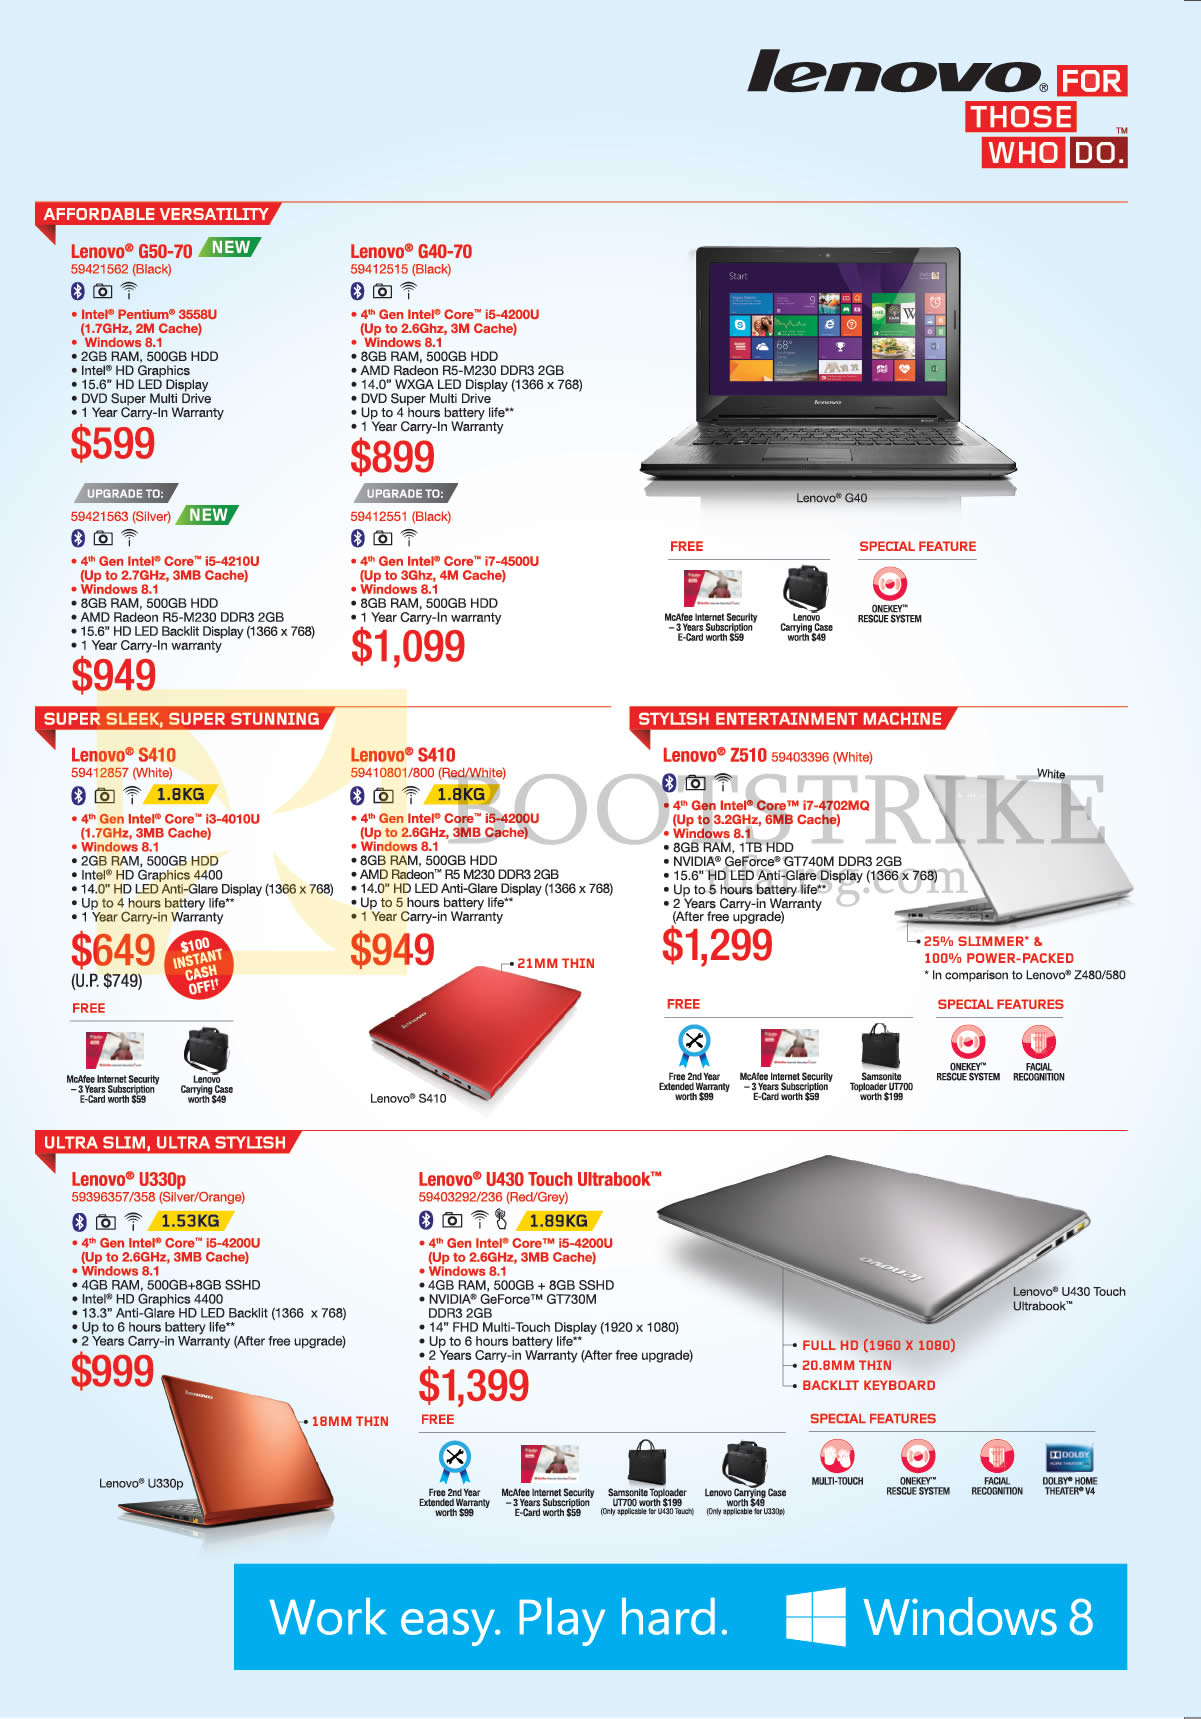 PC SHOW 2014 price list image brochure of Lenovo Notebooks G50-70, G40-70, S410, Z510, U330p, U430 Touch Ultrabook